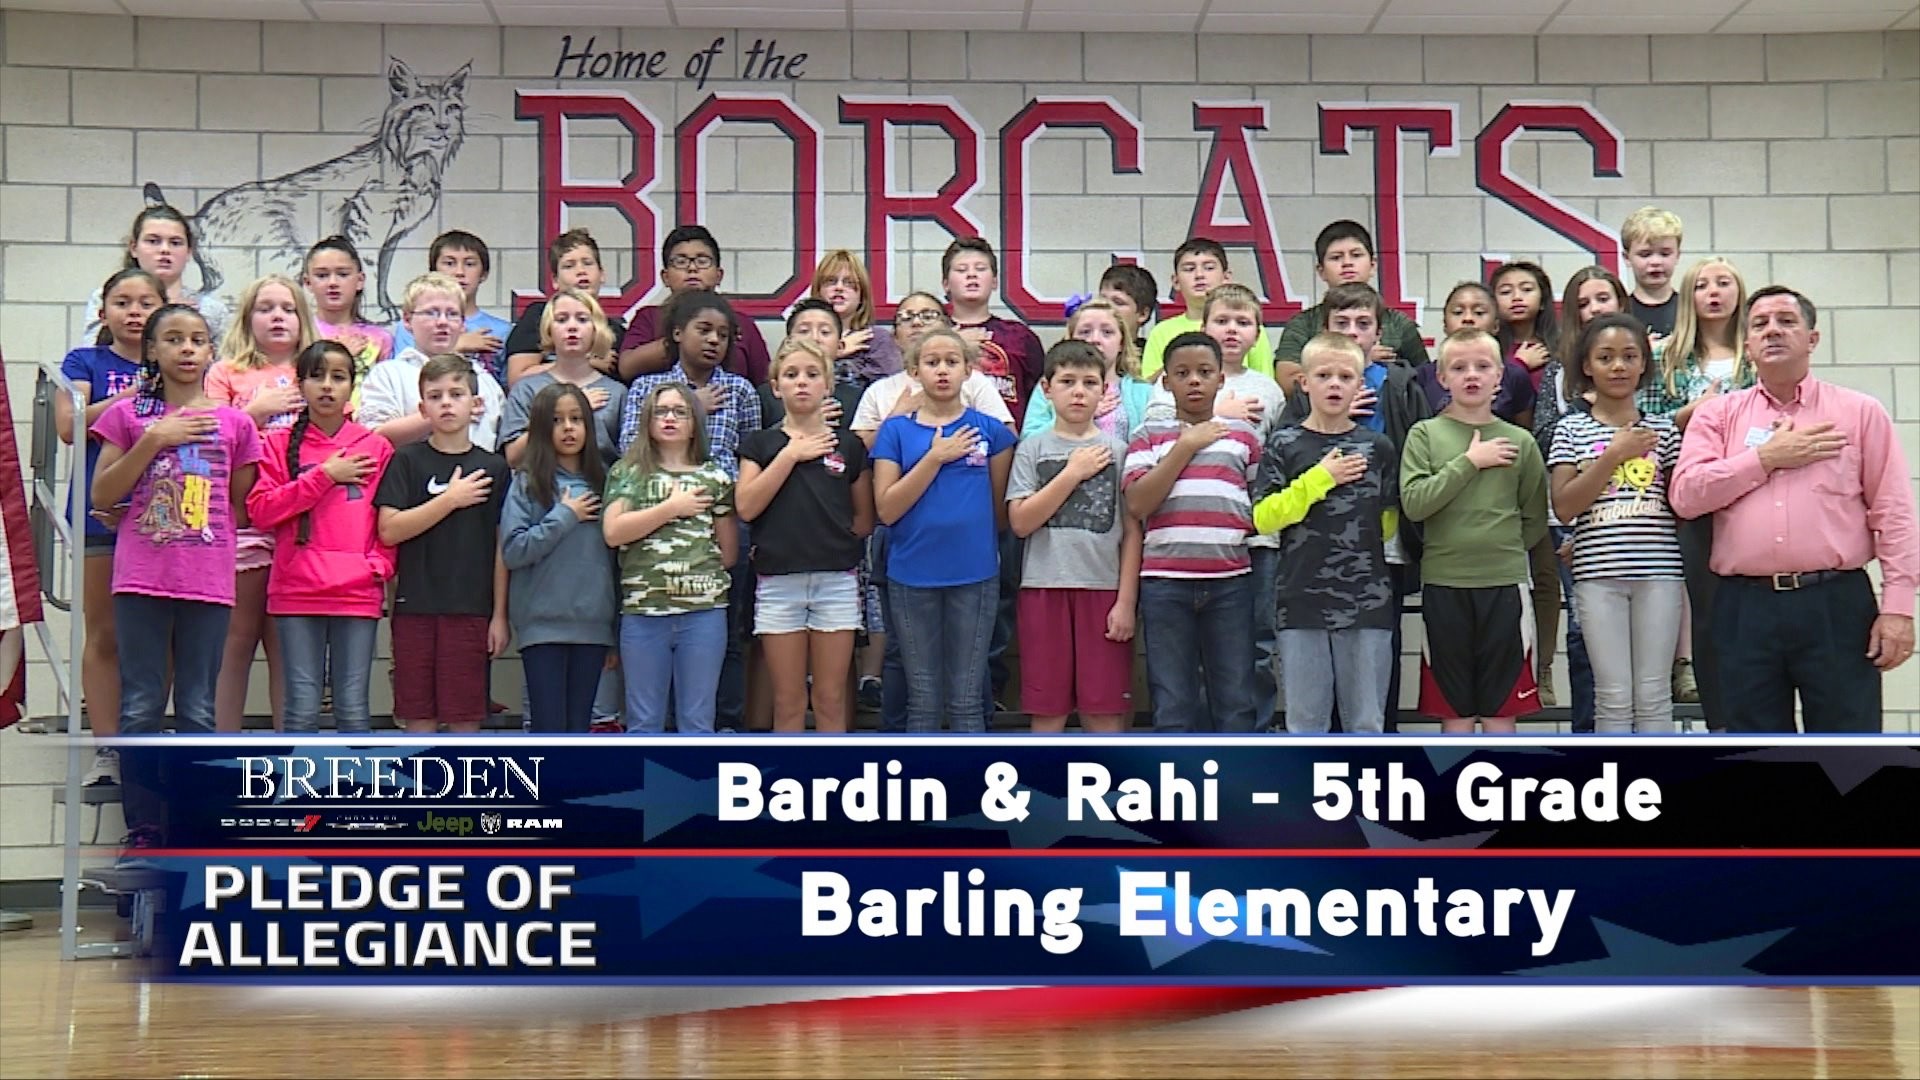 Bradin & Rahi 5th Grad Barling Elementary